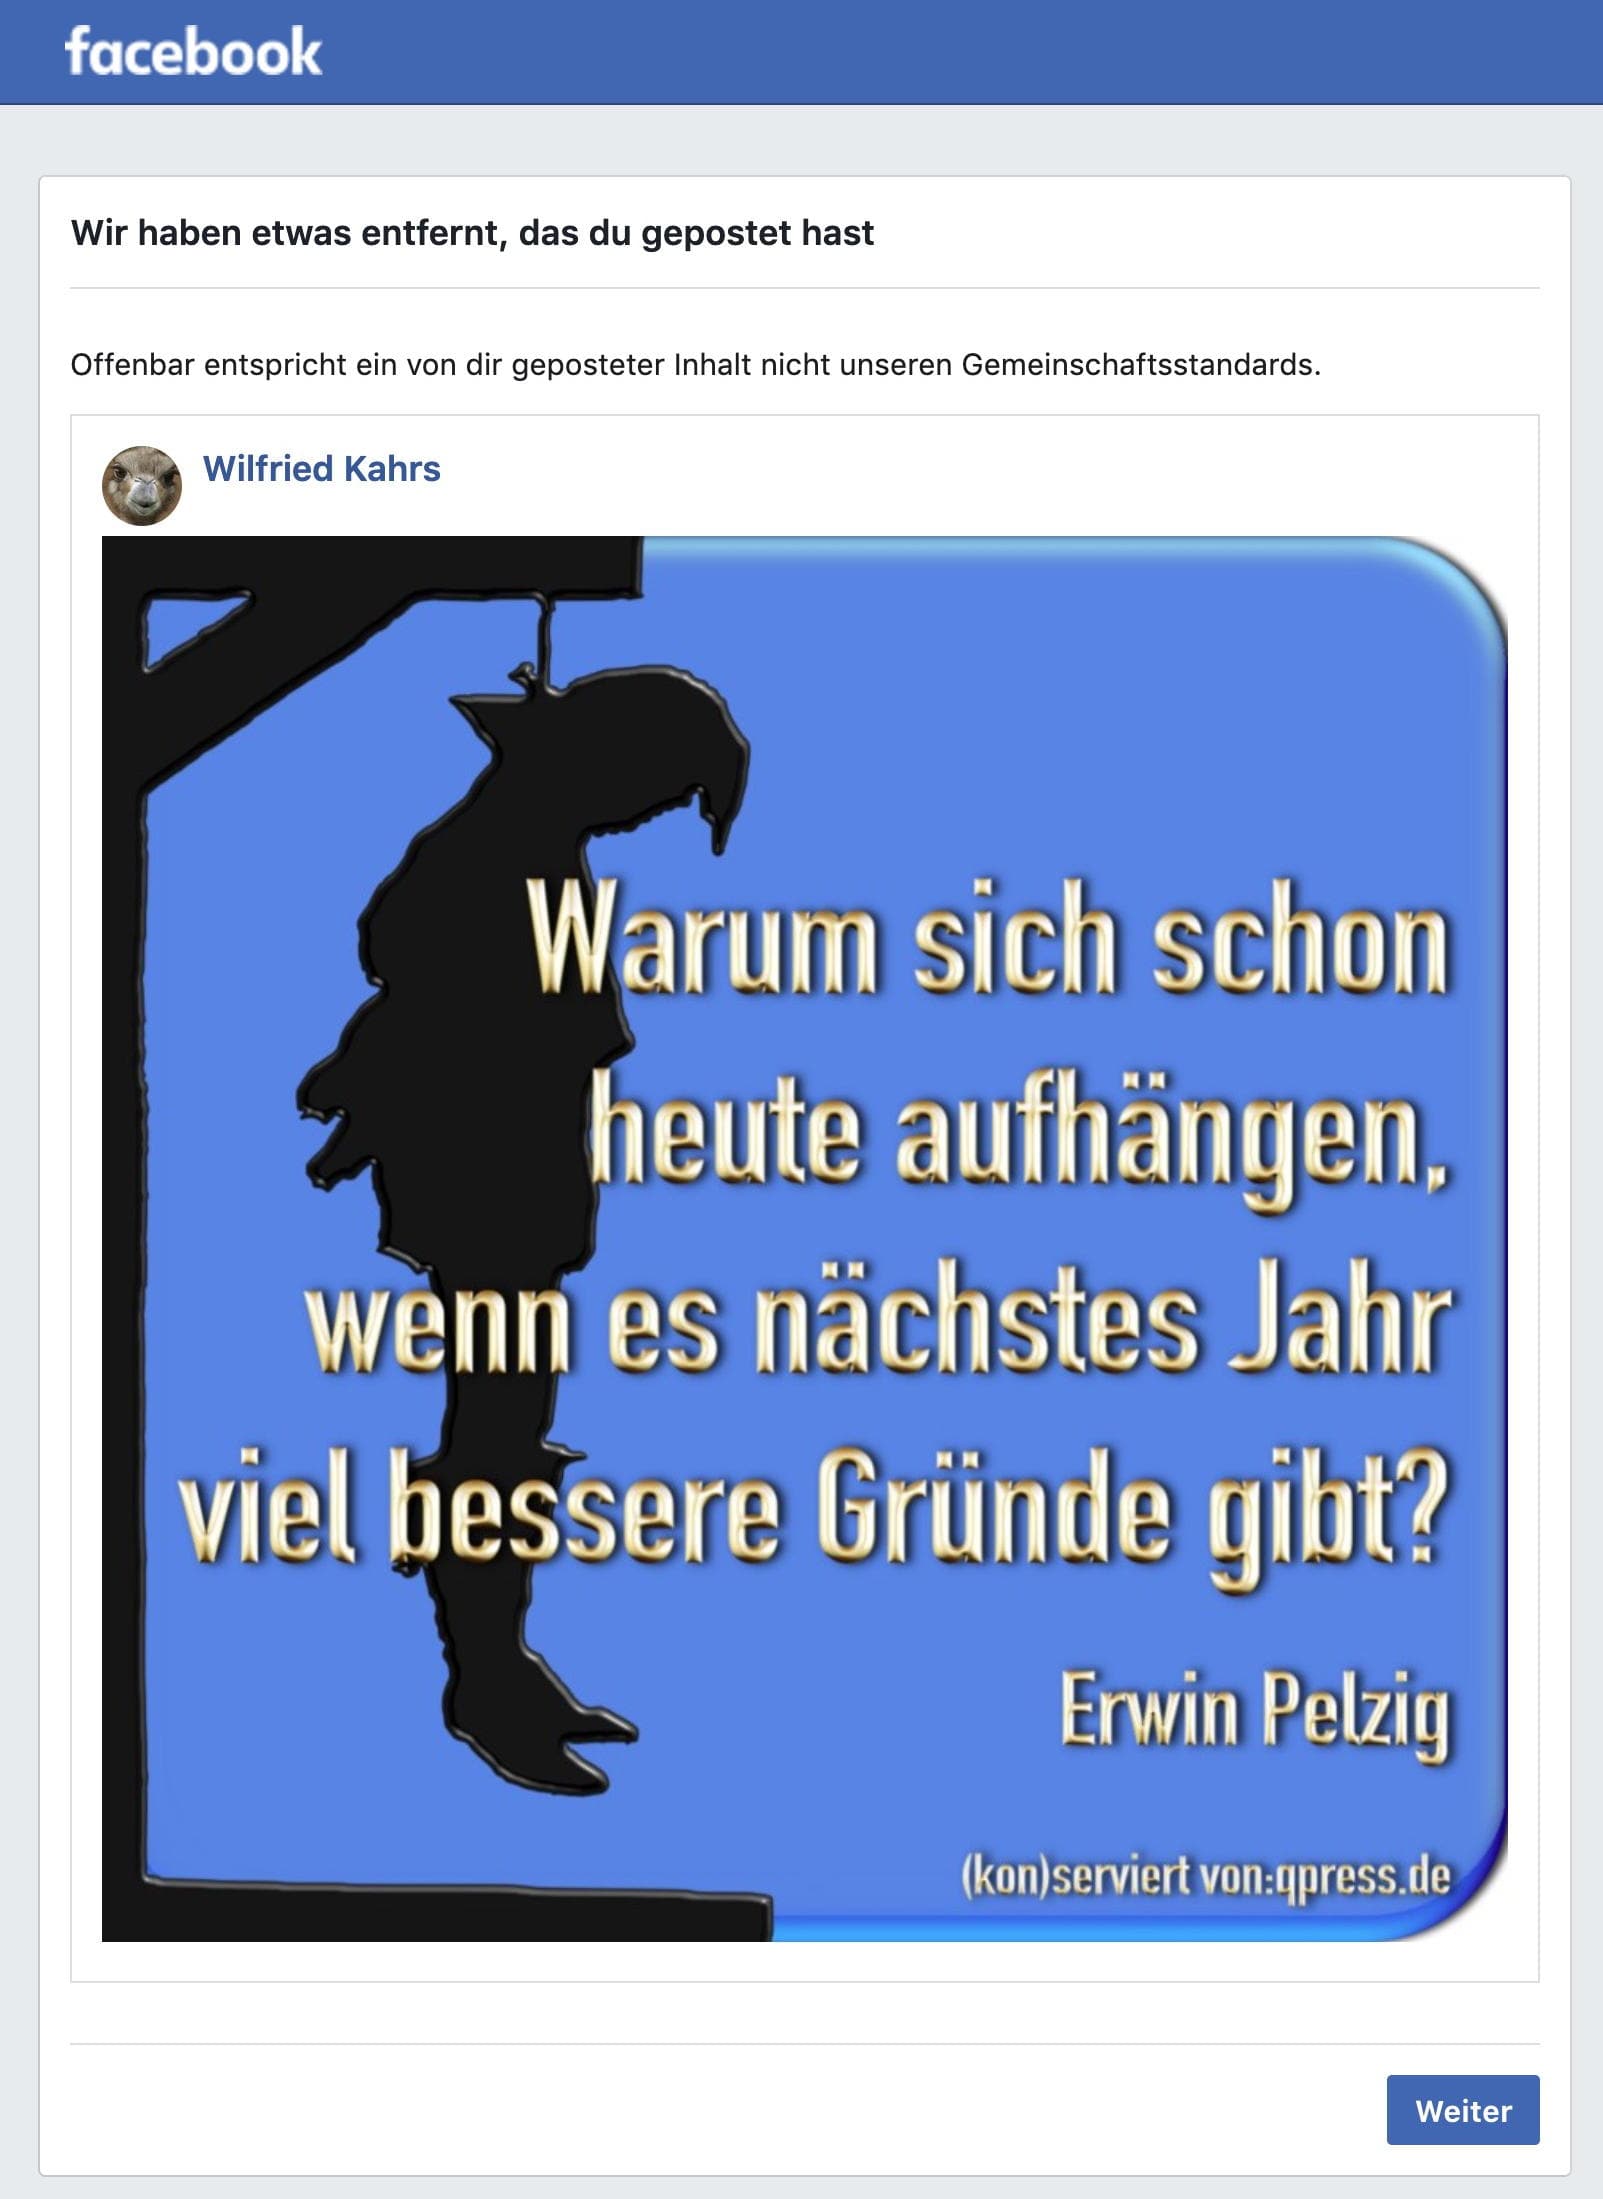 Facebook konto mit eingeschränkter Berechtigung sperre zensur Pelzig Zitat Suizid selbsmord